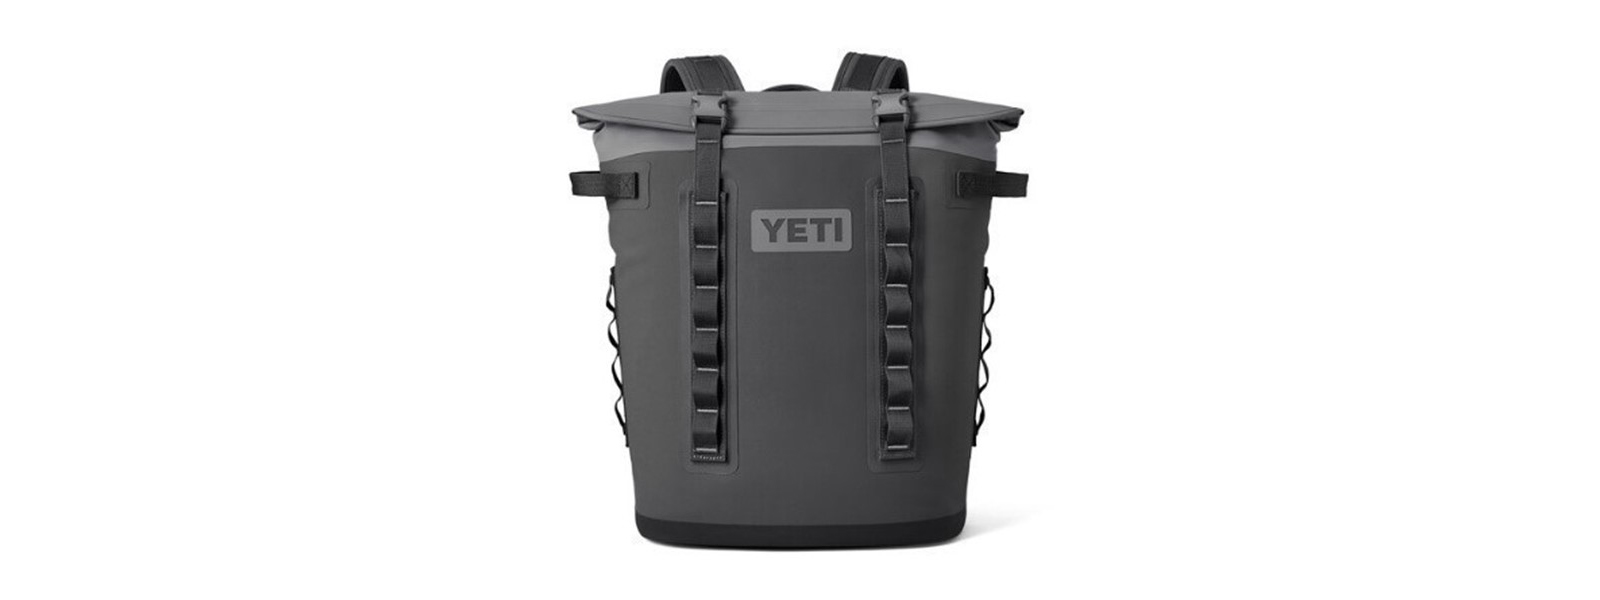 YETI recalls 1.9 million soft coolers, gear cases over magnet ingestion  hazard - ABC News